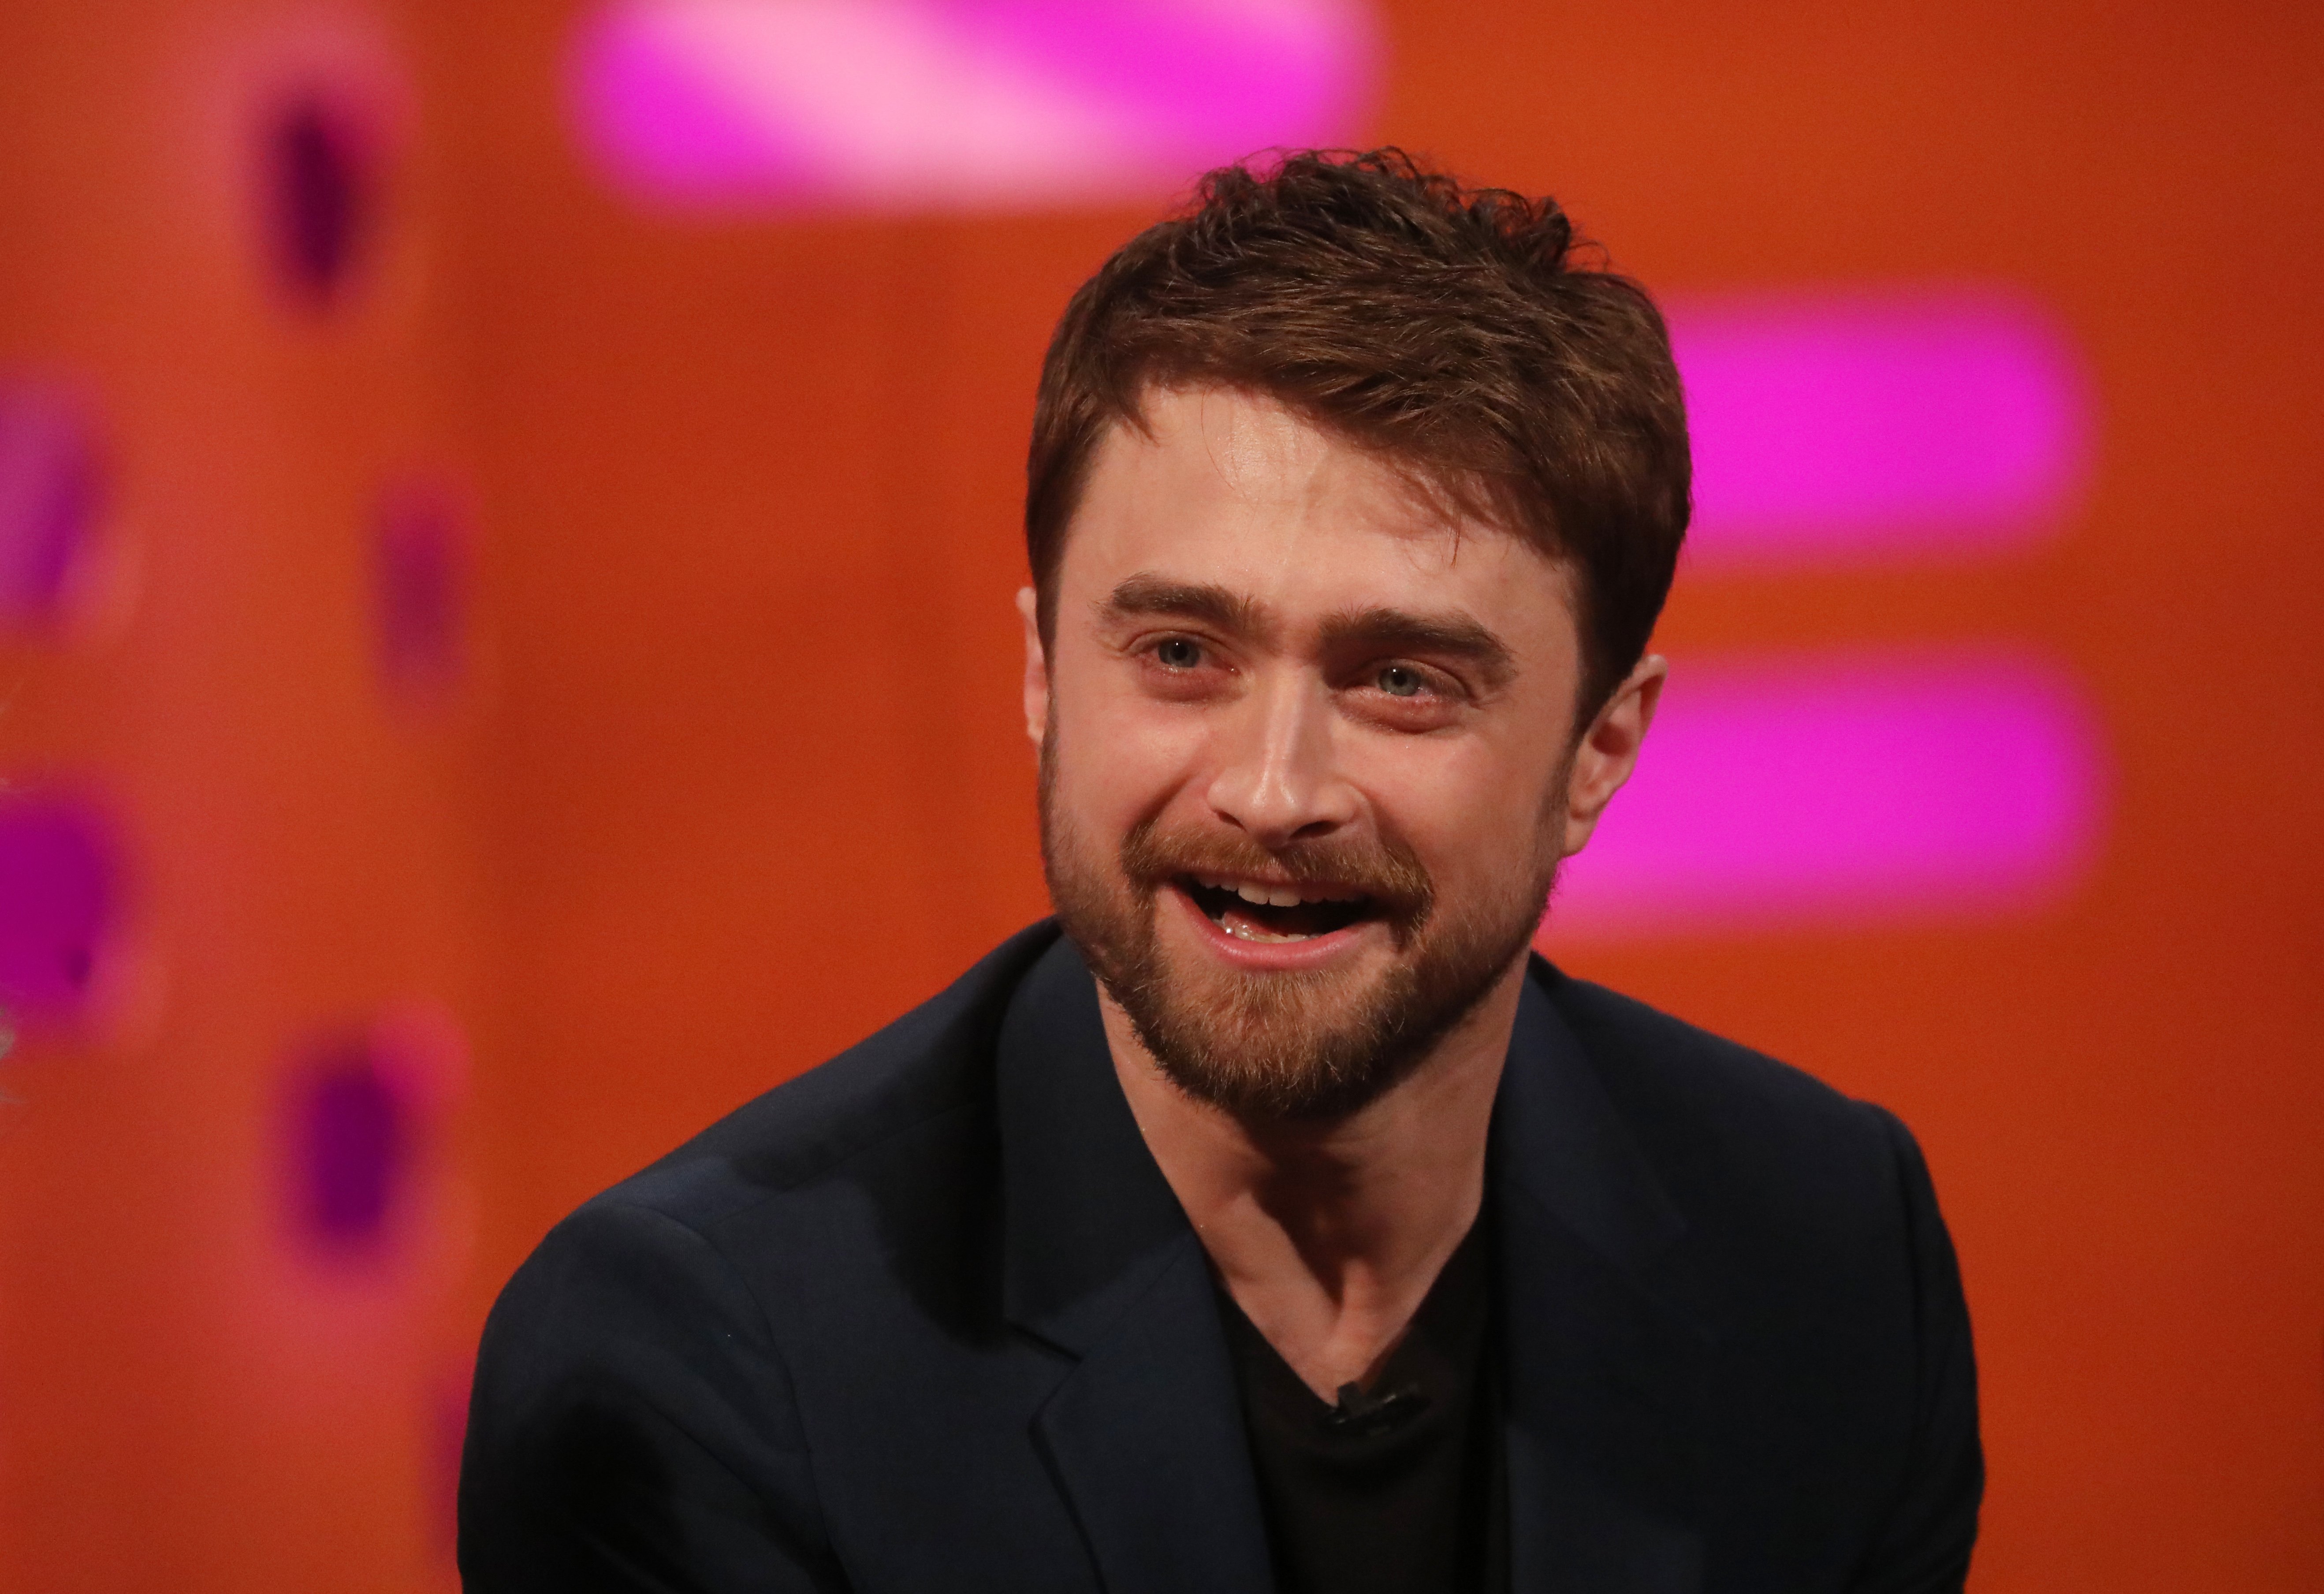 Daniel Radcliffe, "Graham Norton Gösterisi" 9 Ocak 2020'de Londra, Wood Lane'de.  |  Kaynak: Getty Images